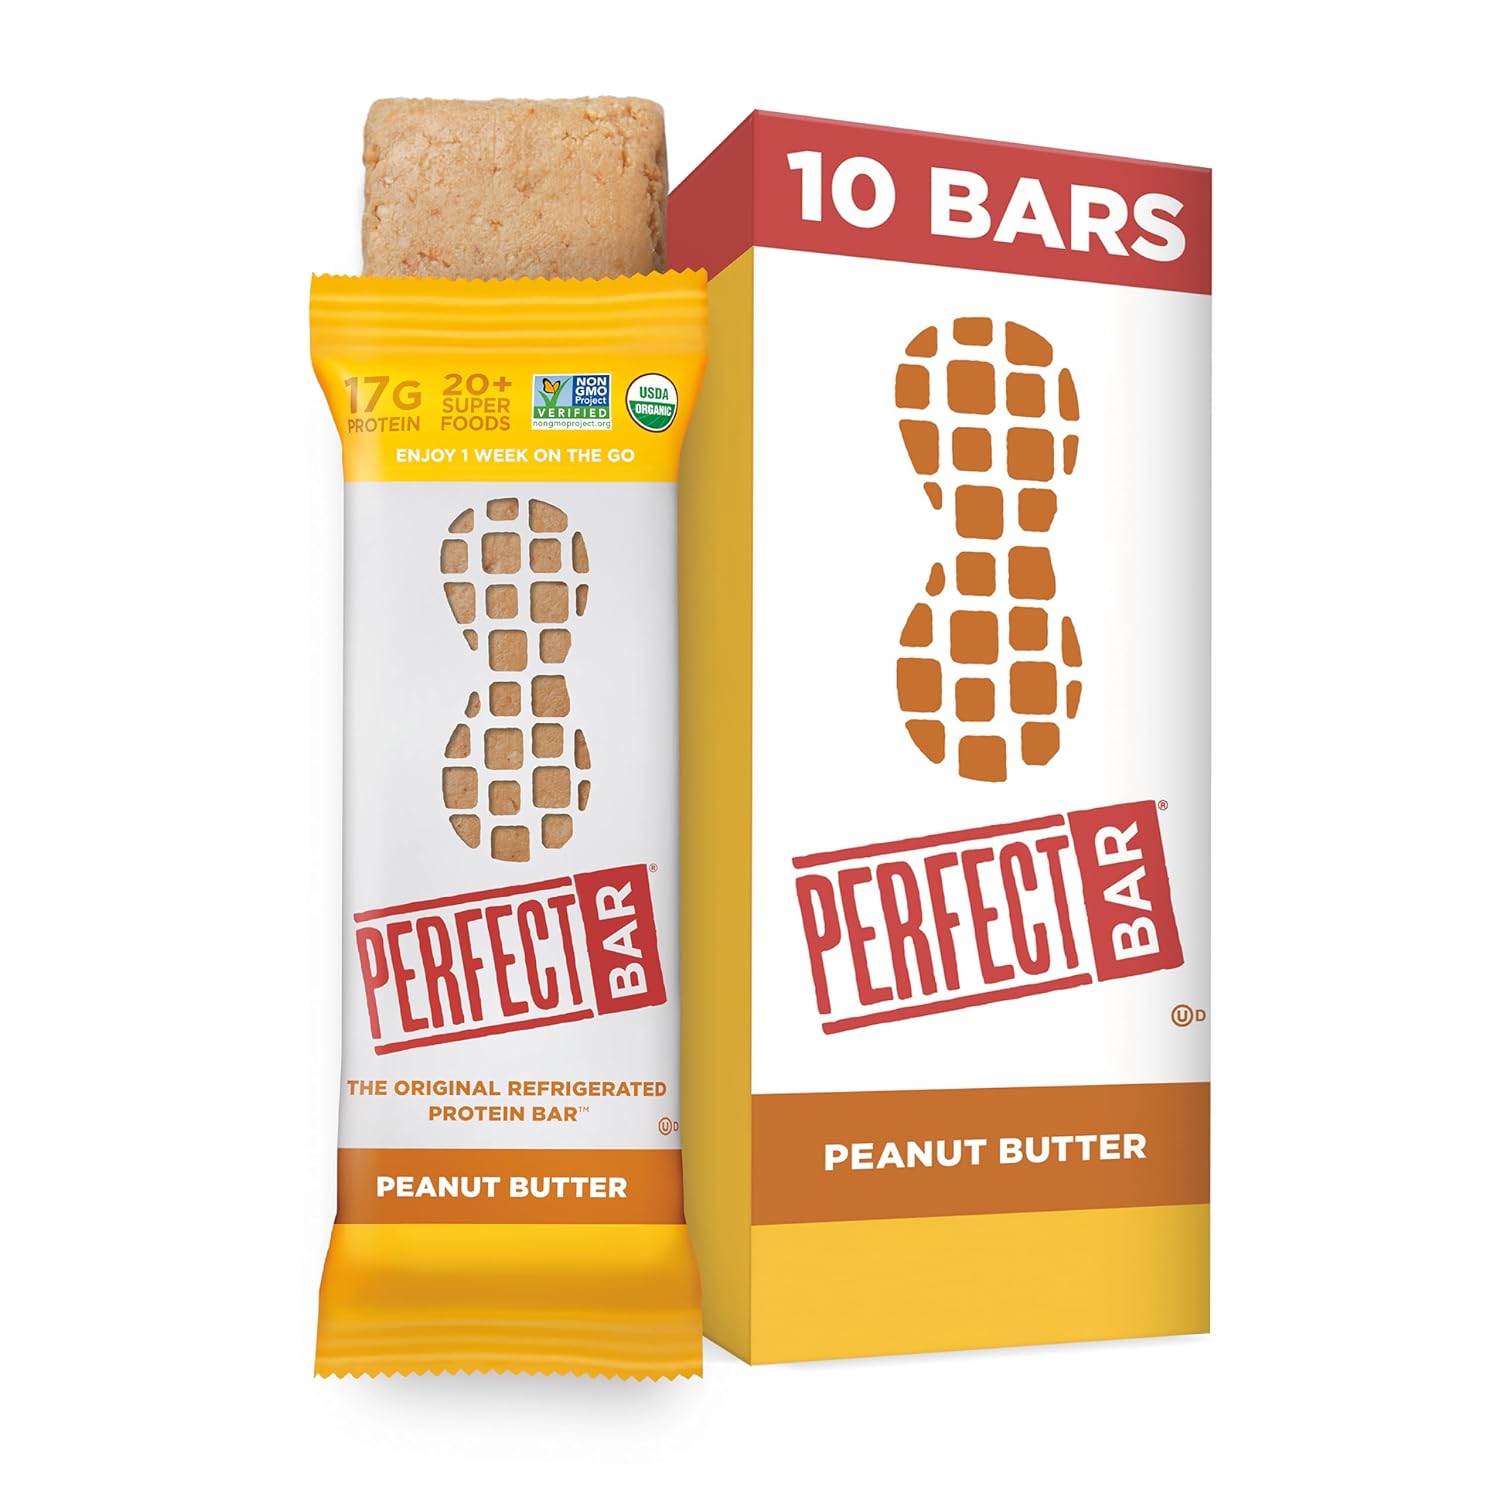 Perfect Bar Original Refrigerated Protein Bar, Peanut Butter, 2.5 Ounce Bar, 8 Count